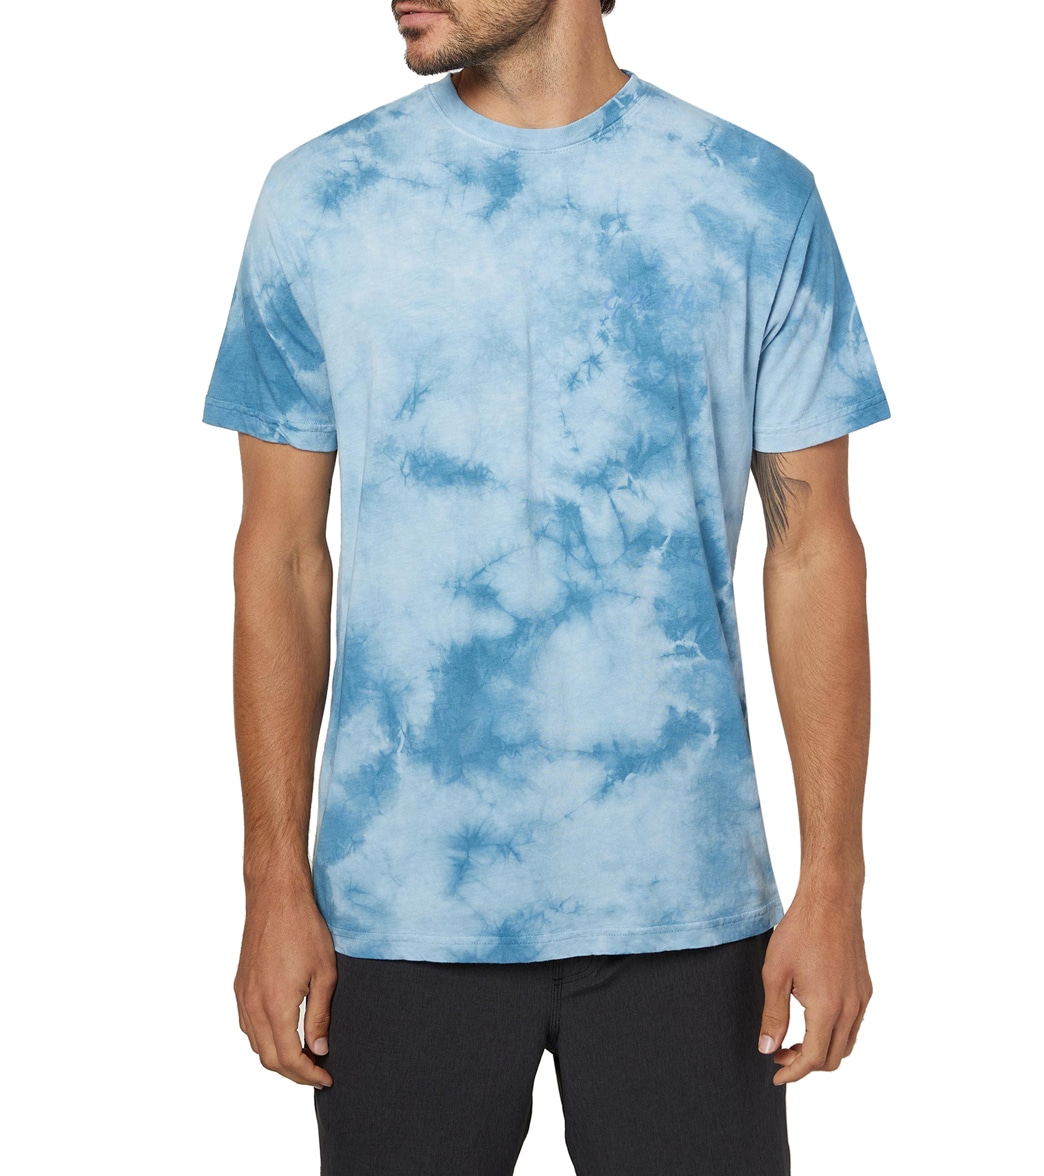 O'neill Men's Departure Tie Dye Short Sleeve Shirt - Jewel Medium Cotton - Swimoutlet.com